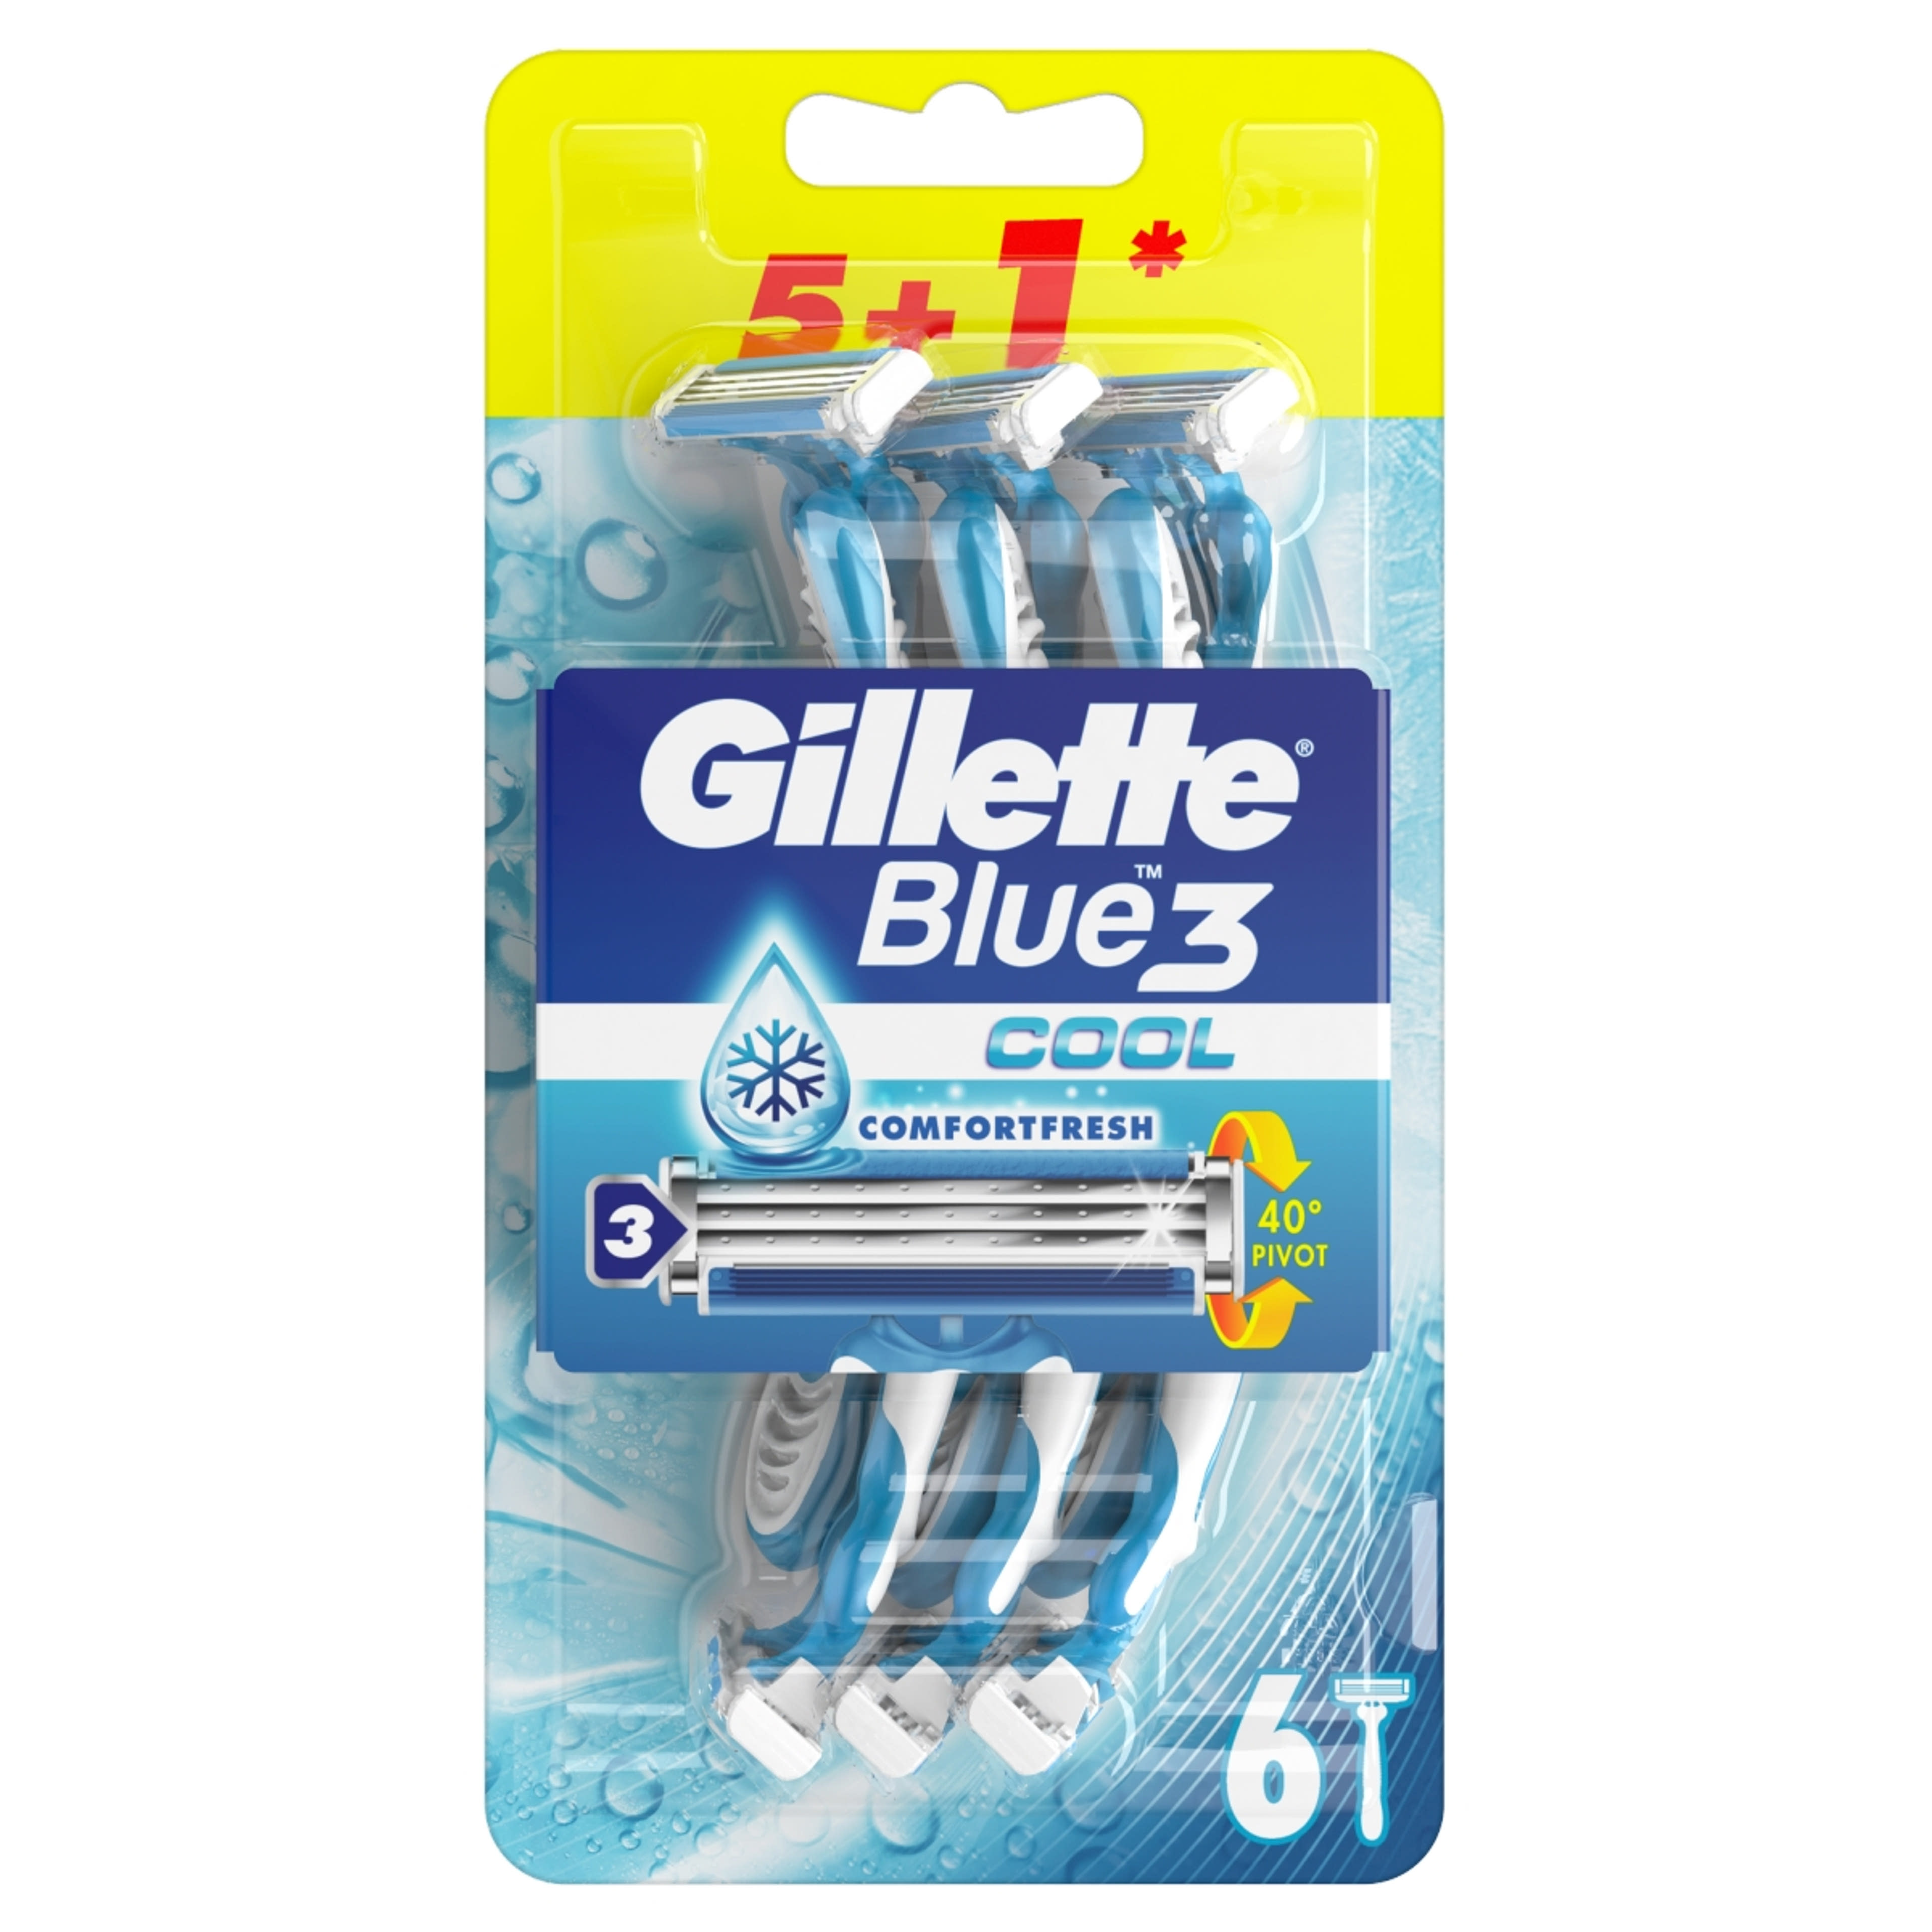 Gillette blue3 cool eldobható borotva 5 + 1 - 6 db-1